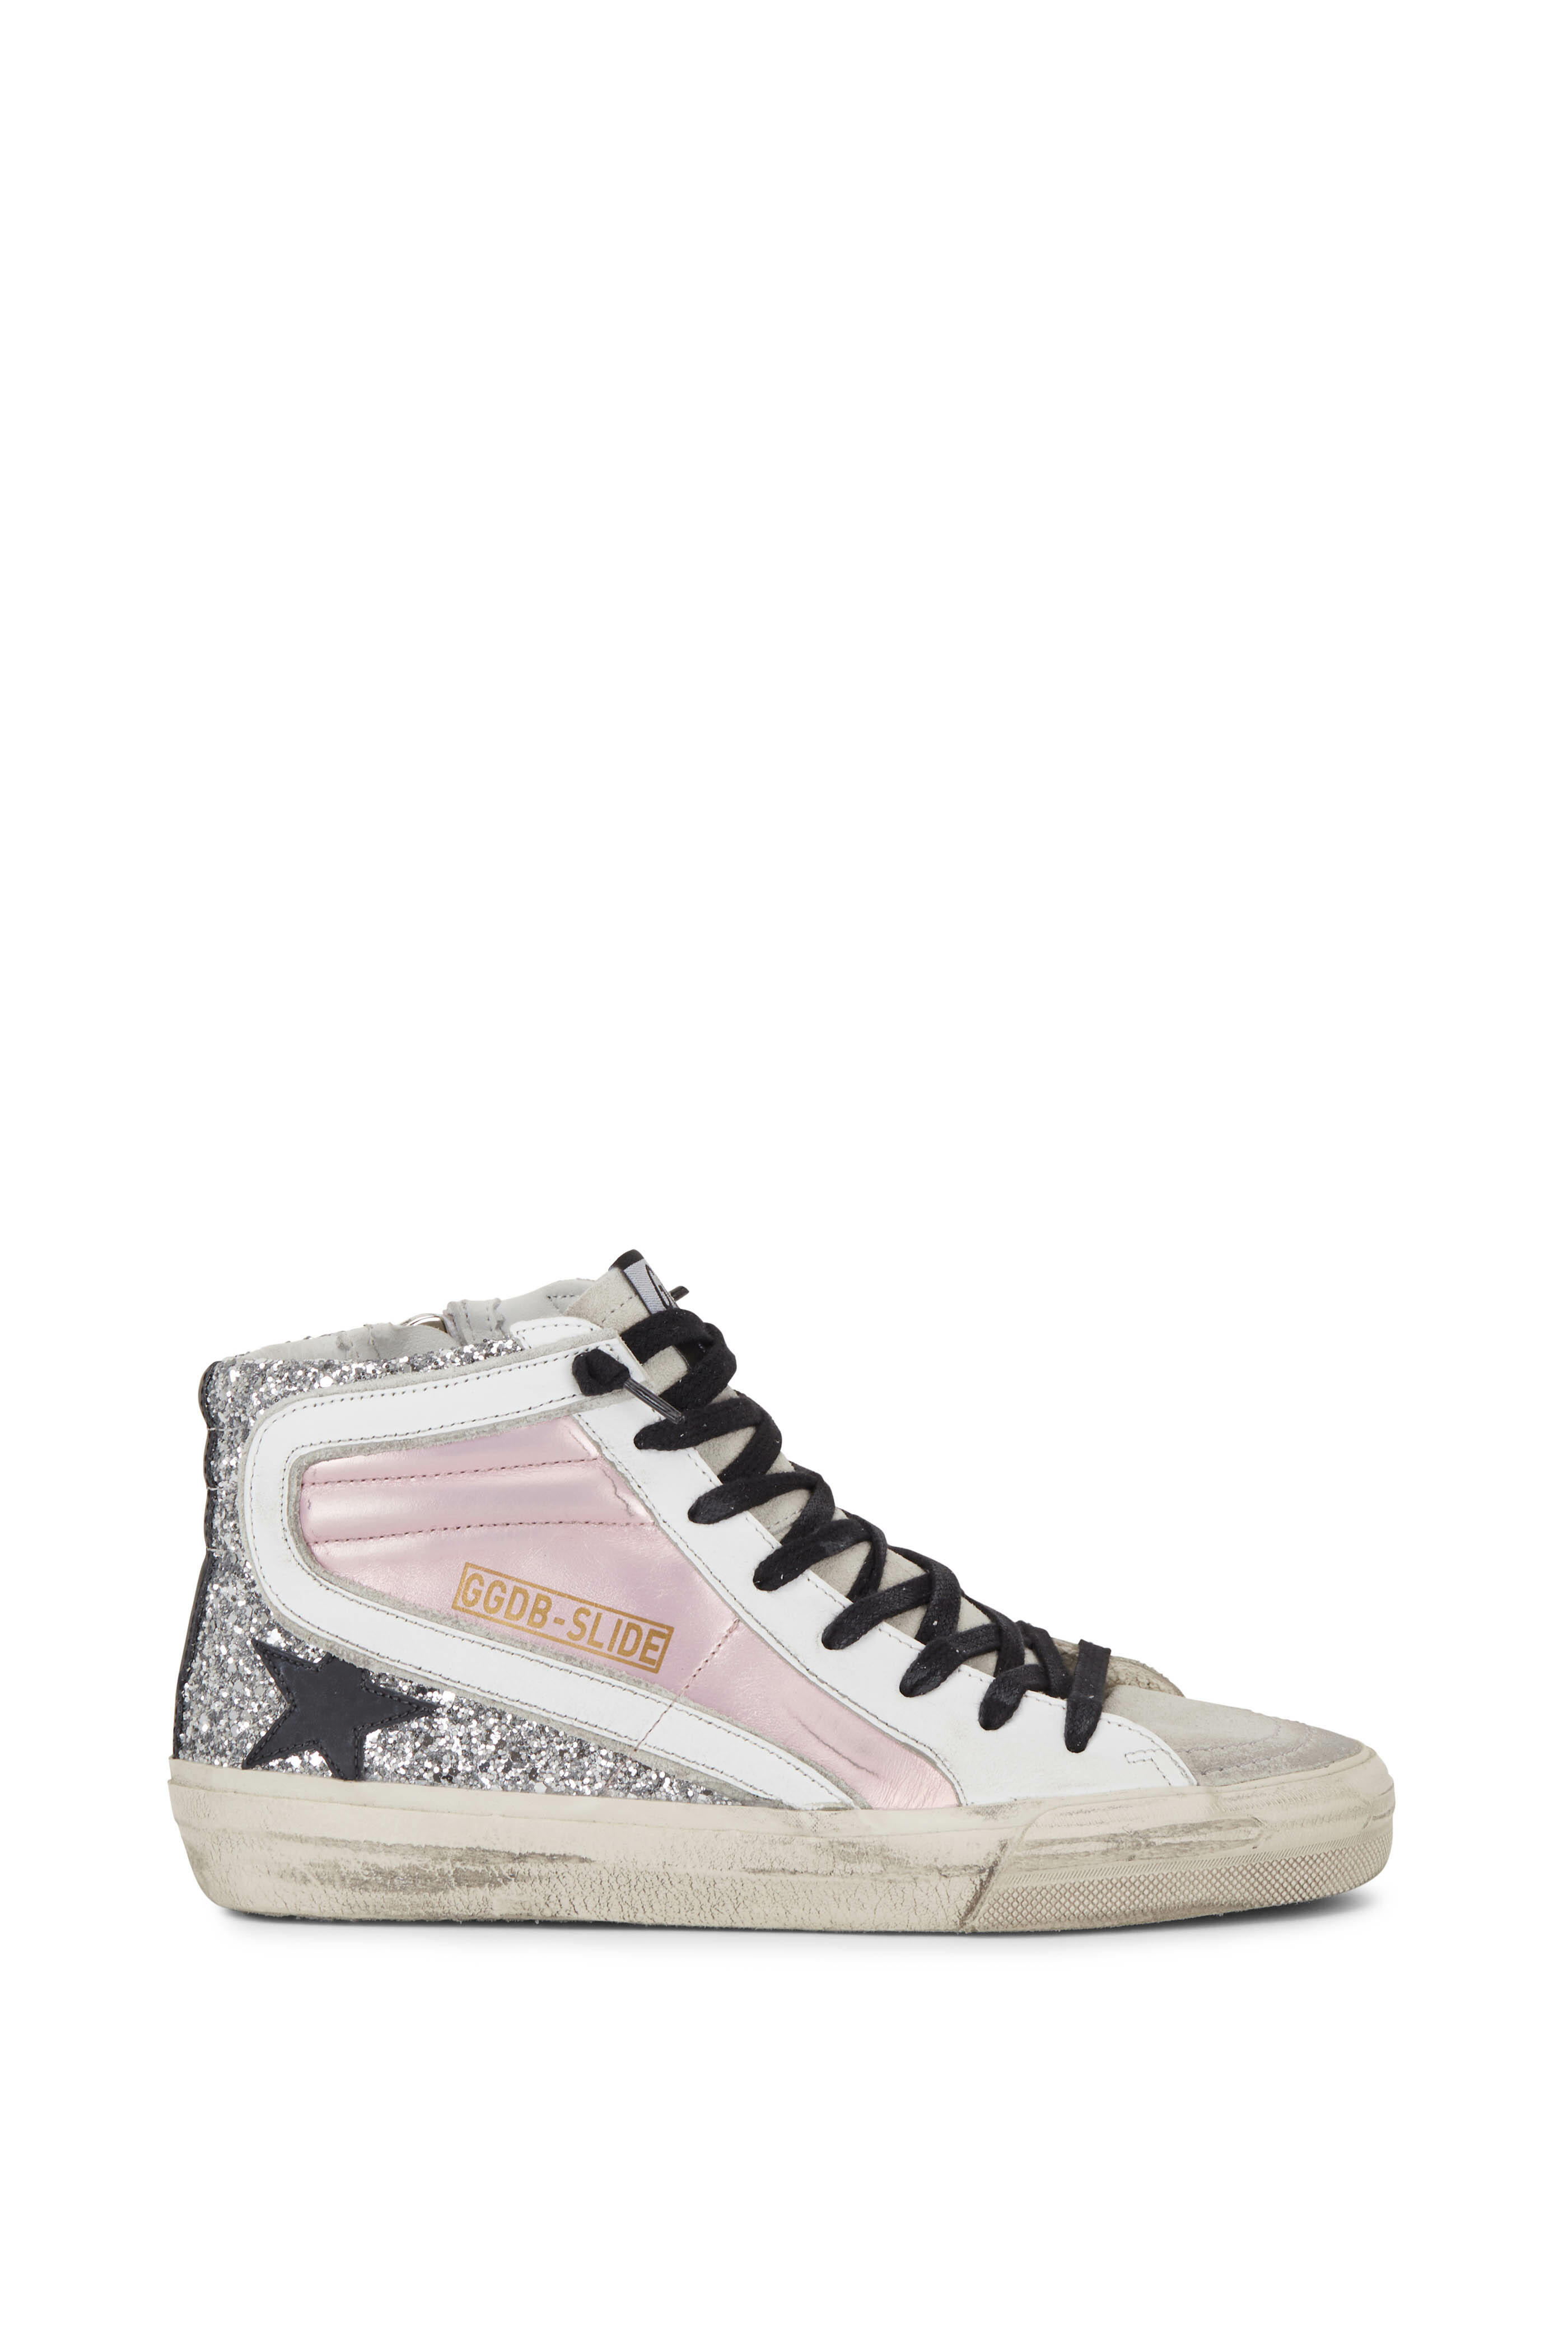 Golden Goose - Slide Silver Glitter & Pink Leather Sneaker